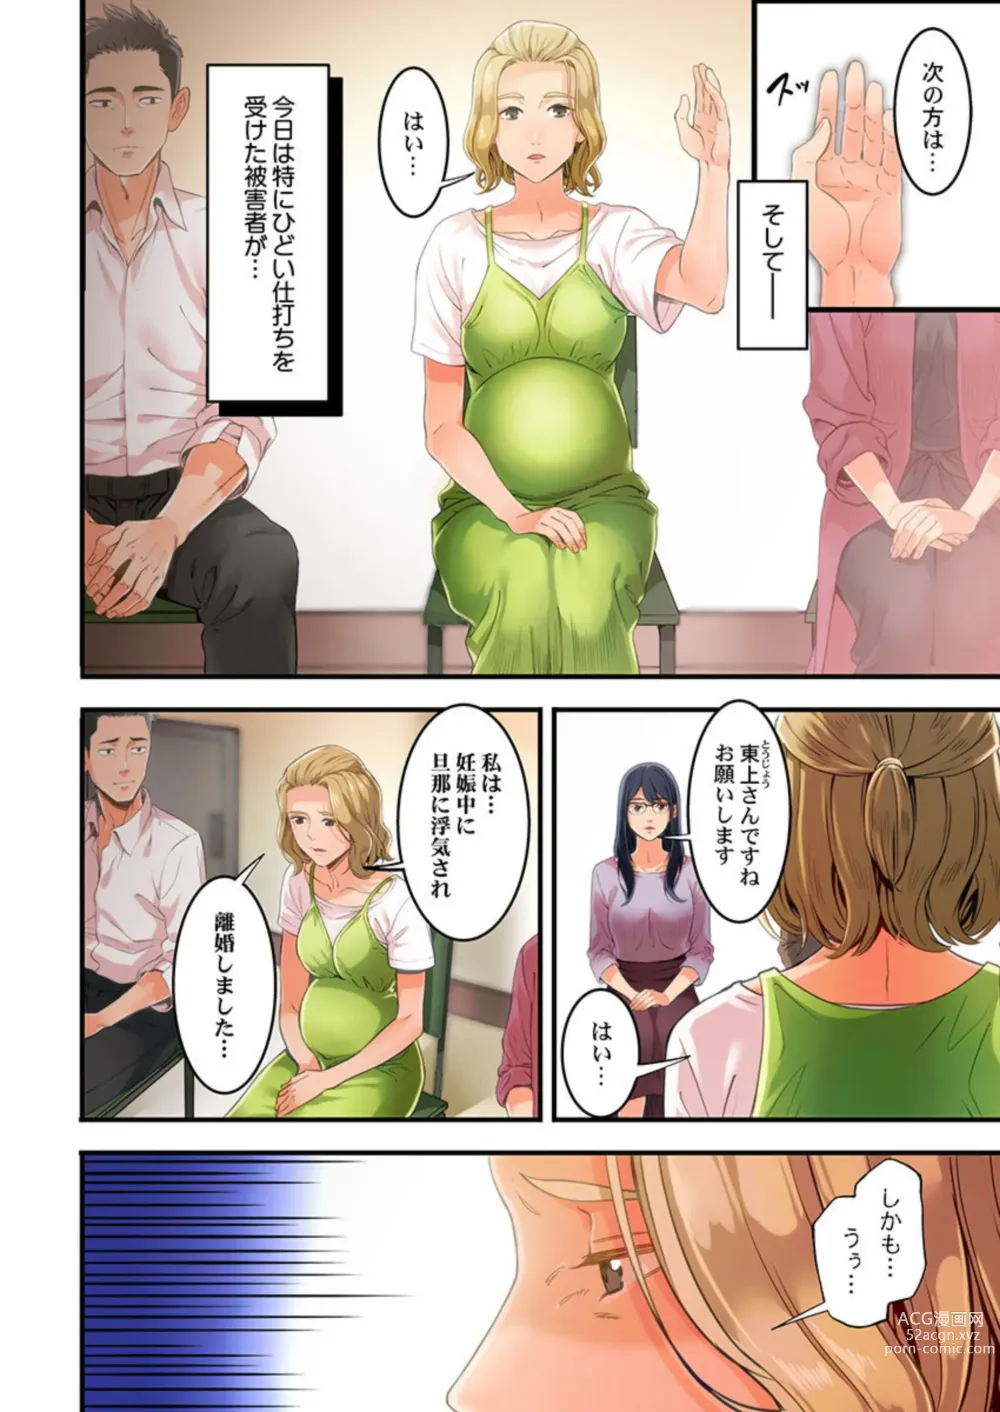 Page 4 of manga Furin Higaisha no kai